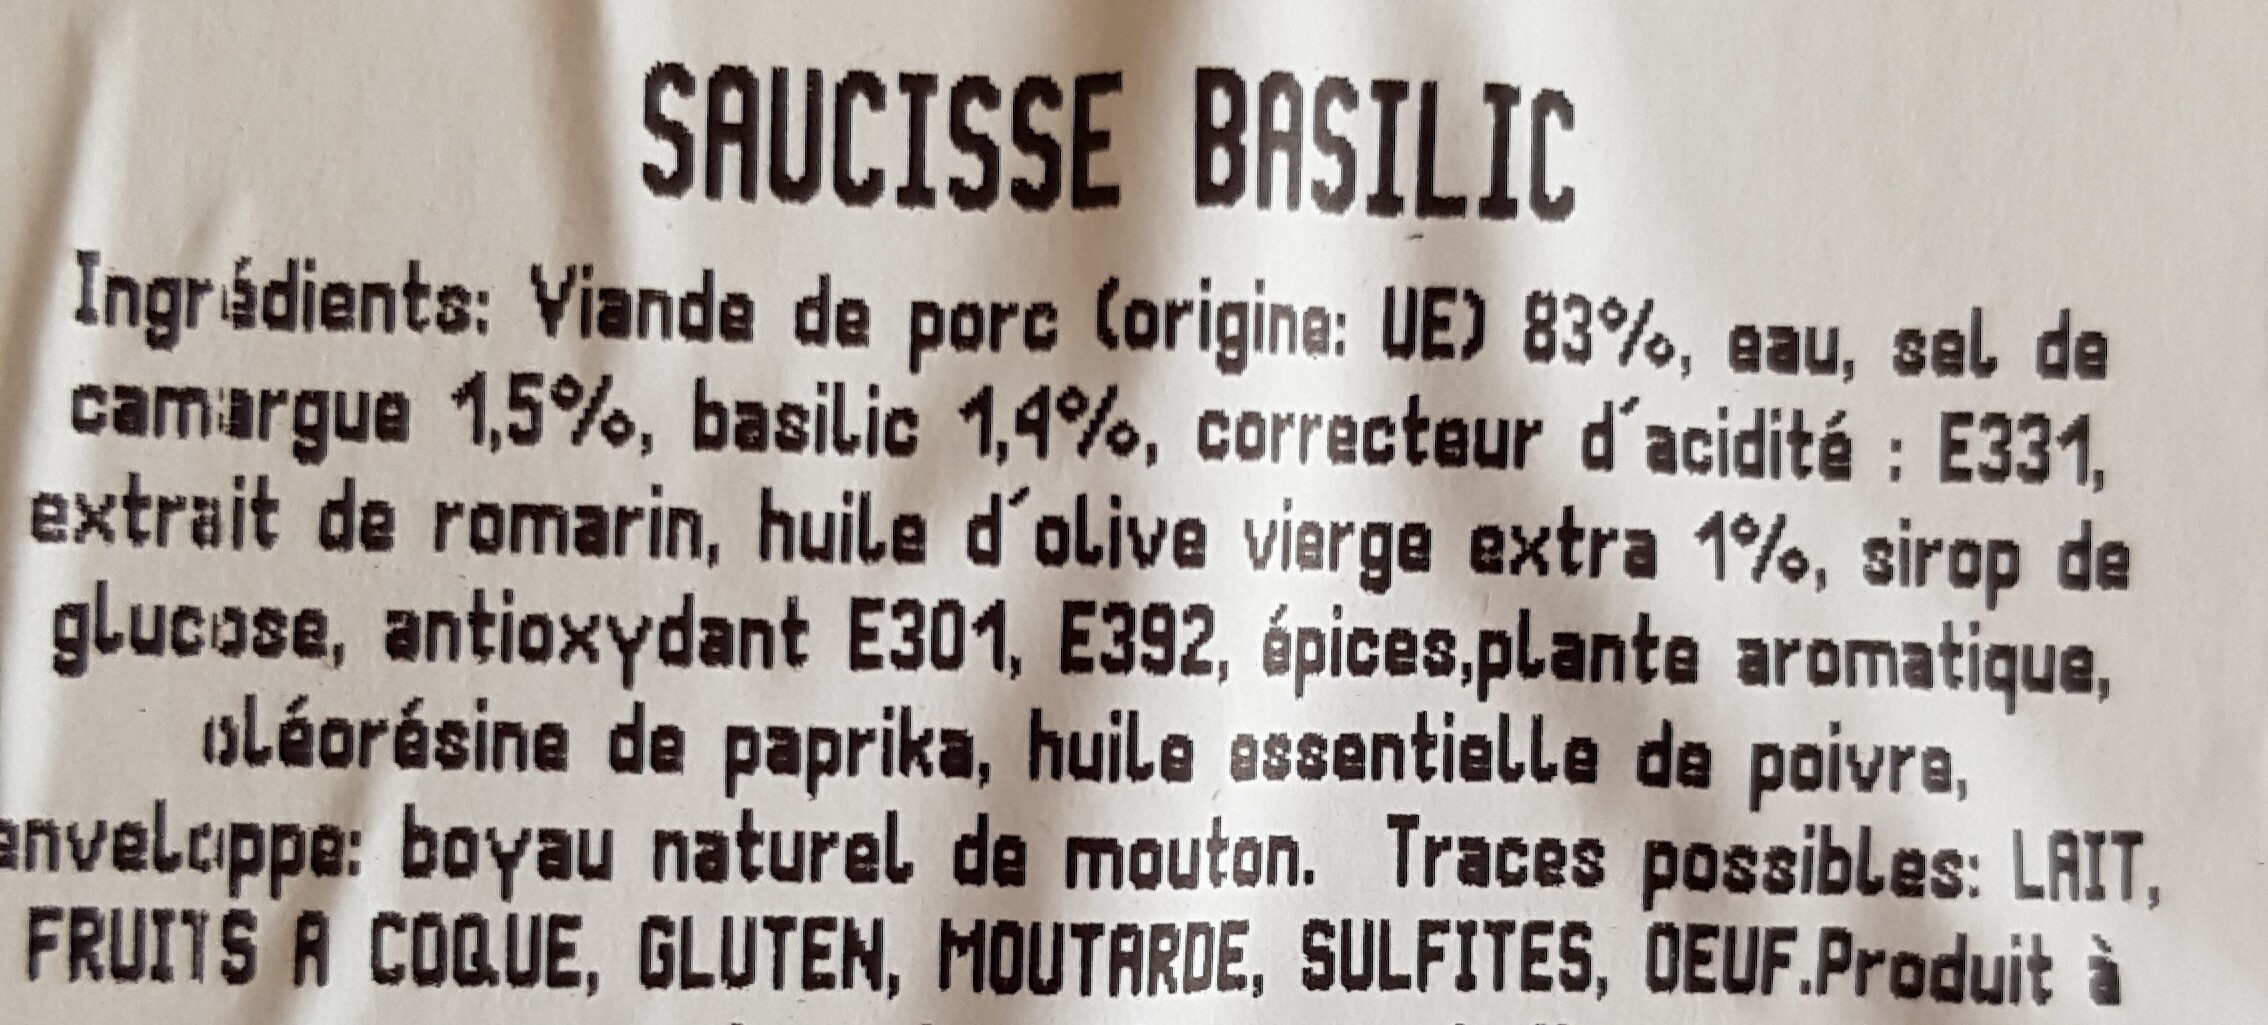 Saucisse au basilic huile d'olive vierge extra - Ingredients - fr